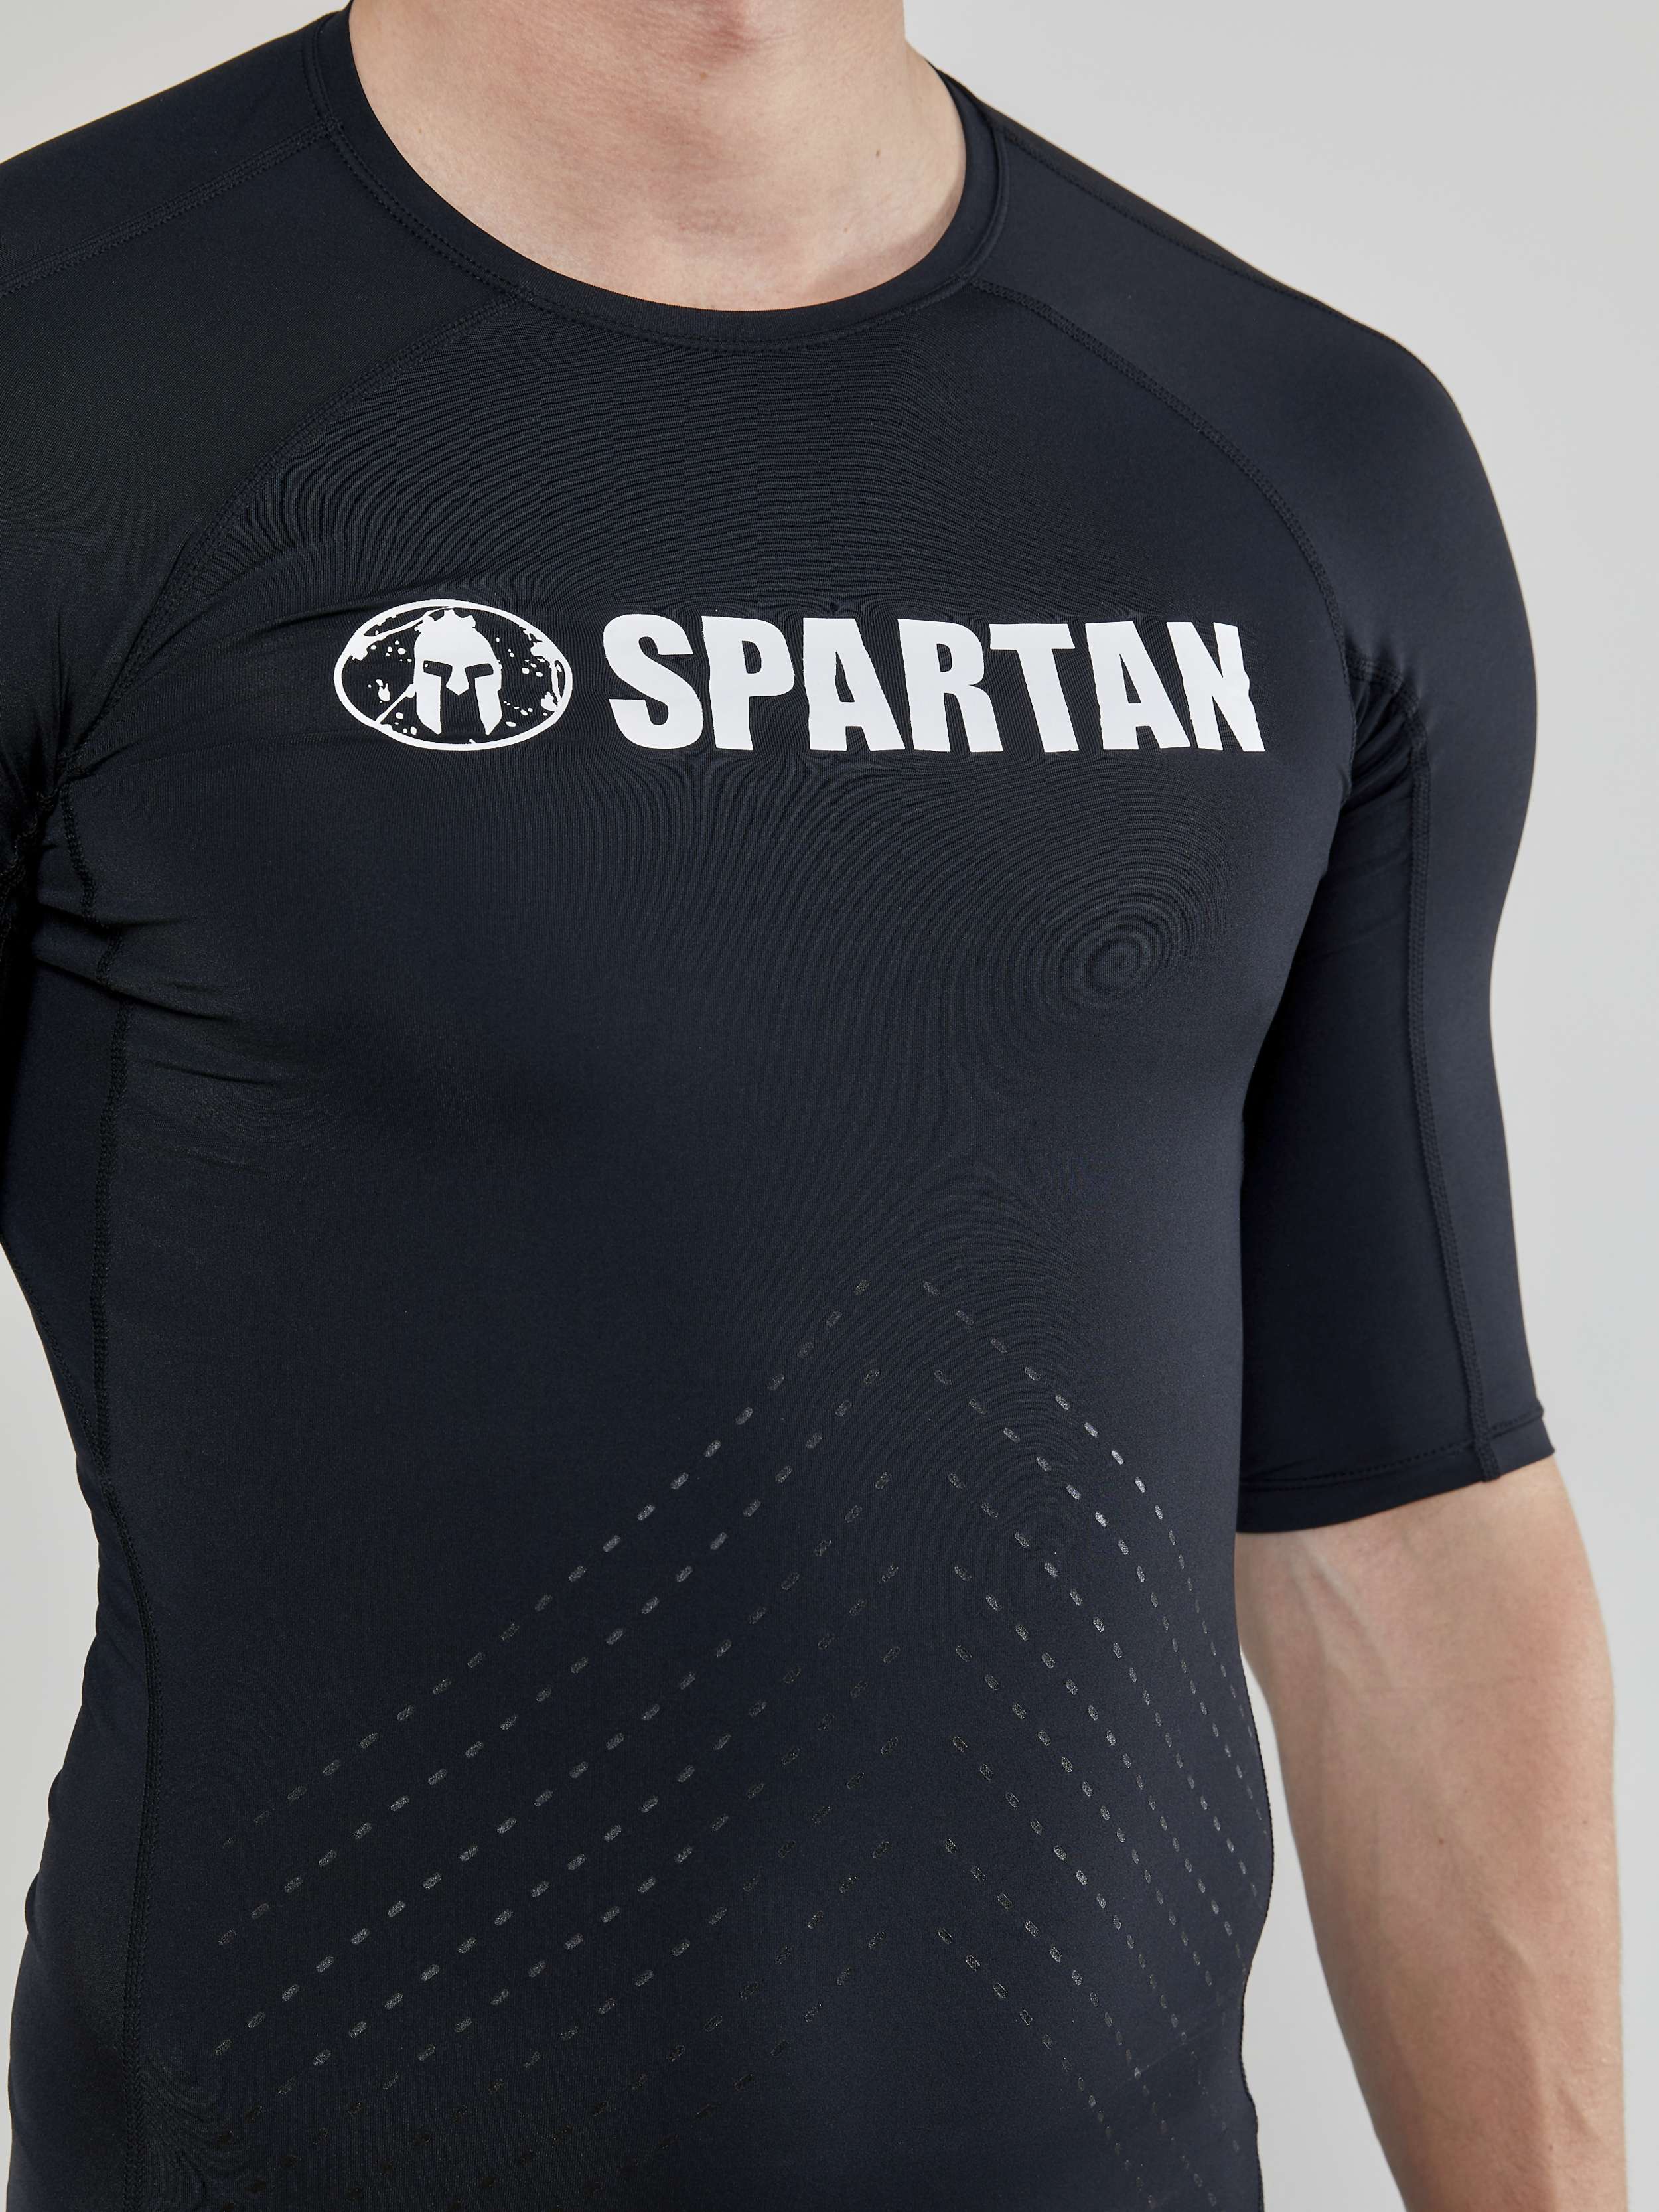 Spartan Compression M - Black | Craft